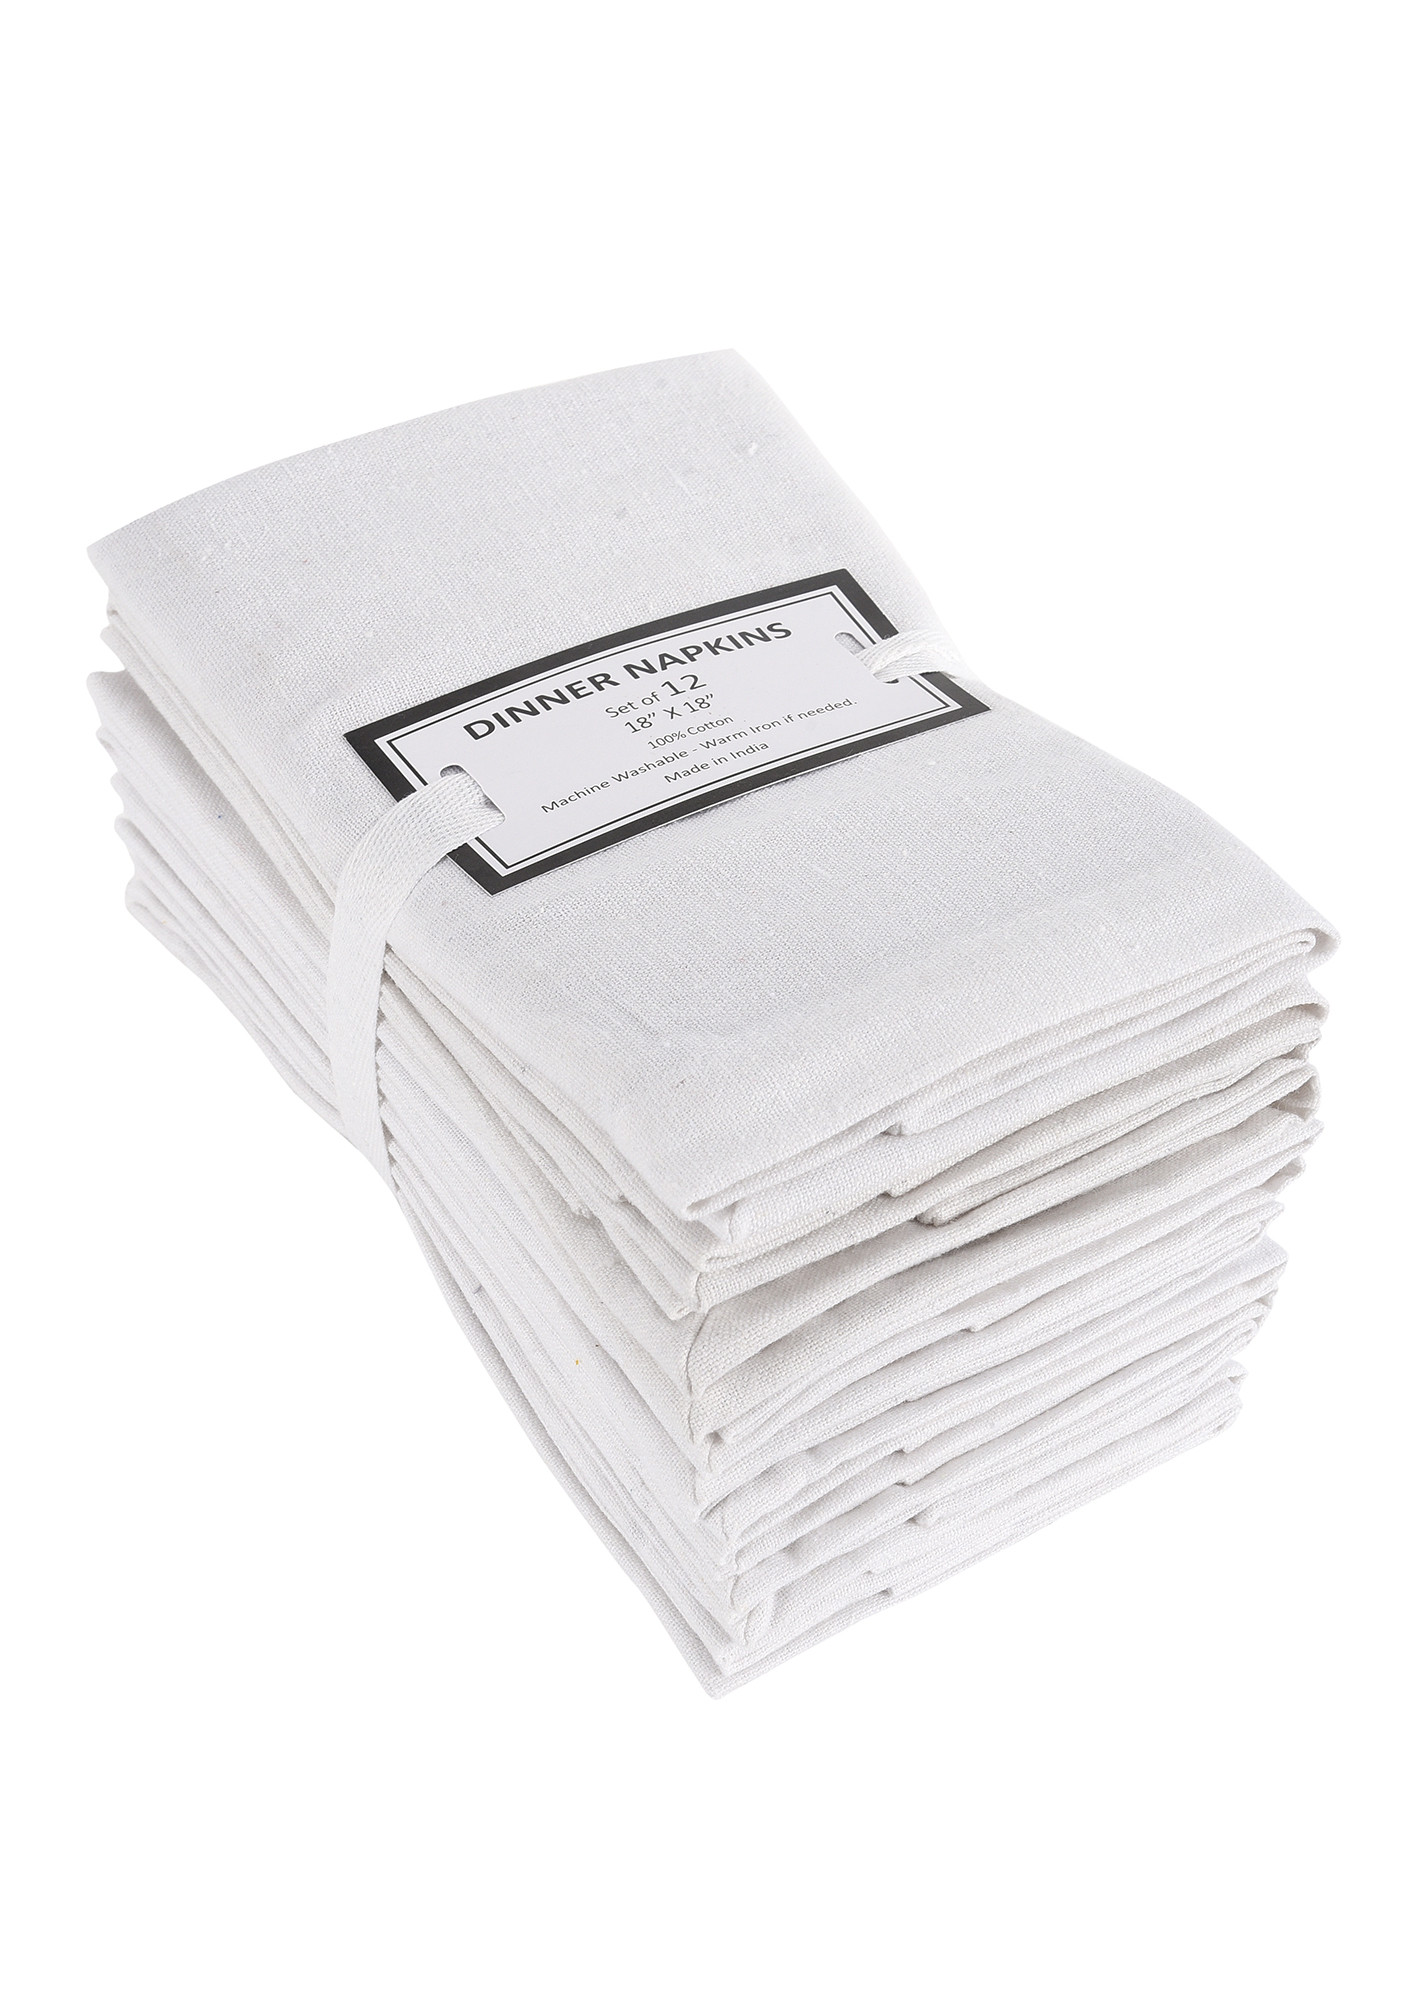  ACCENTHOME Natural Cotton Linen Napkin Set of 12 18x18